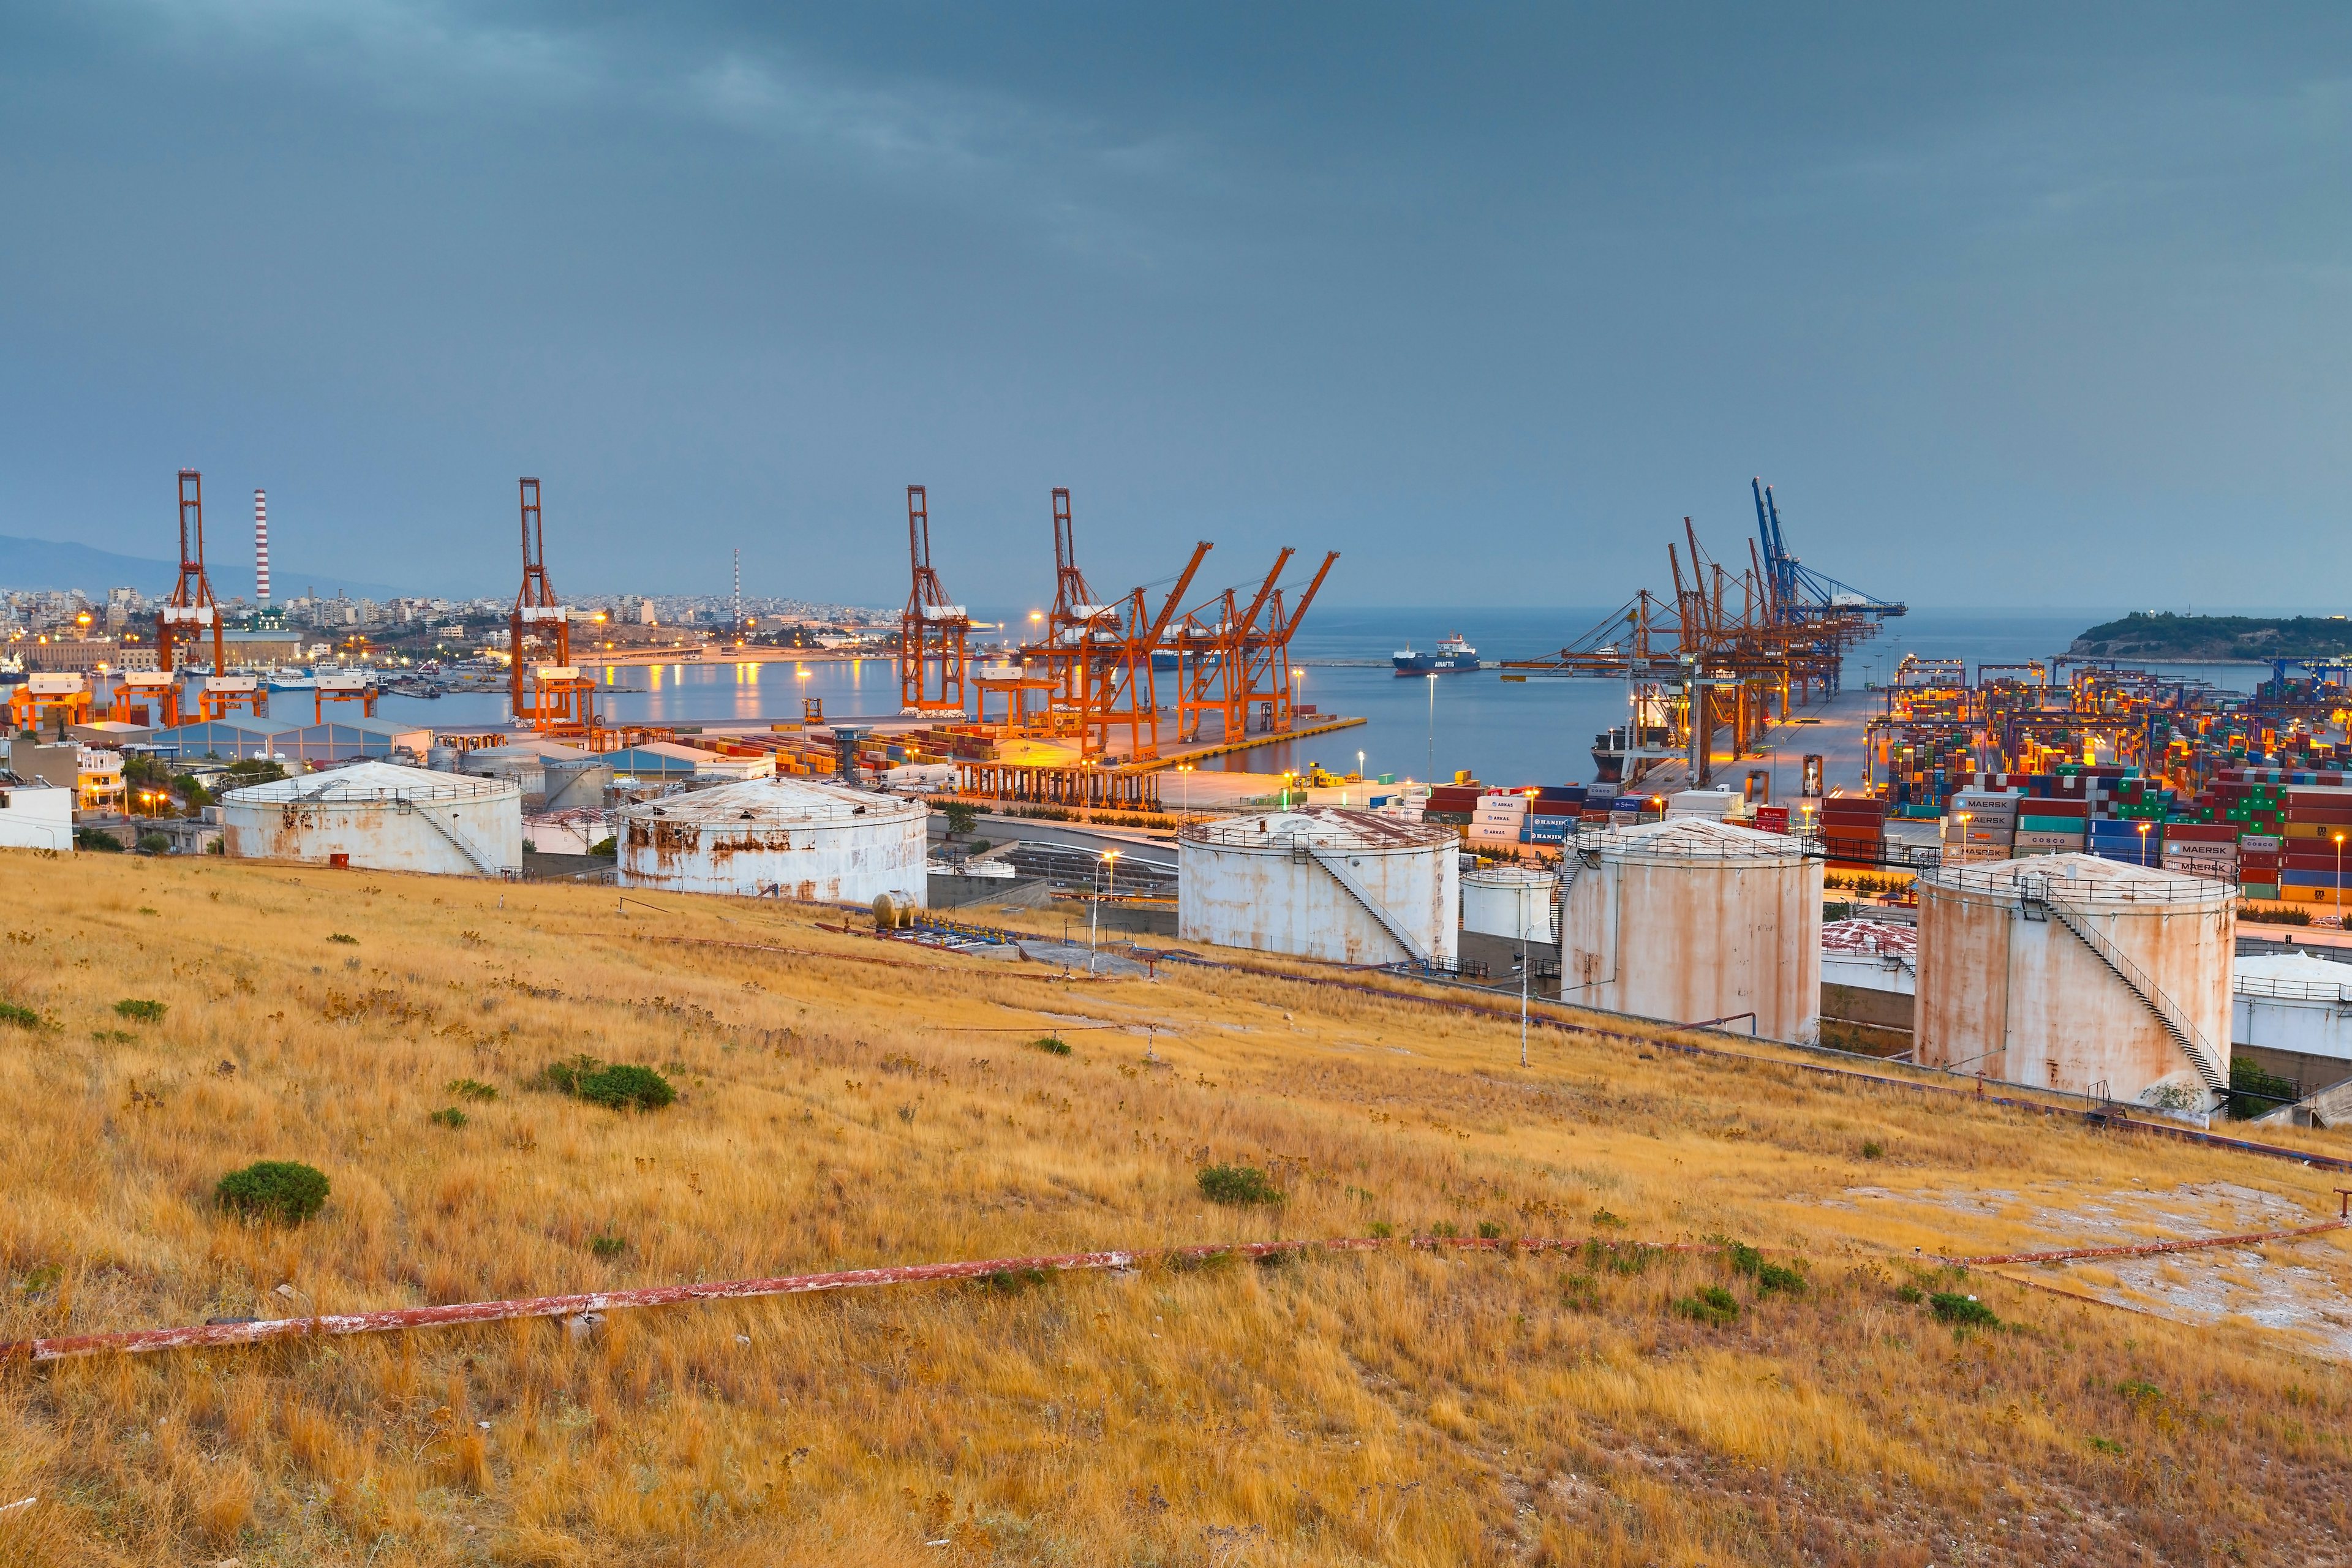 Piraeus Port Authority in Greece. Image via Shutterstock.